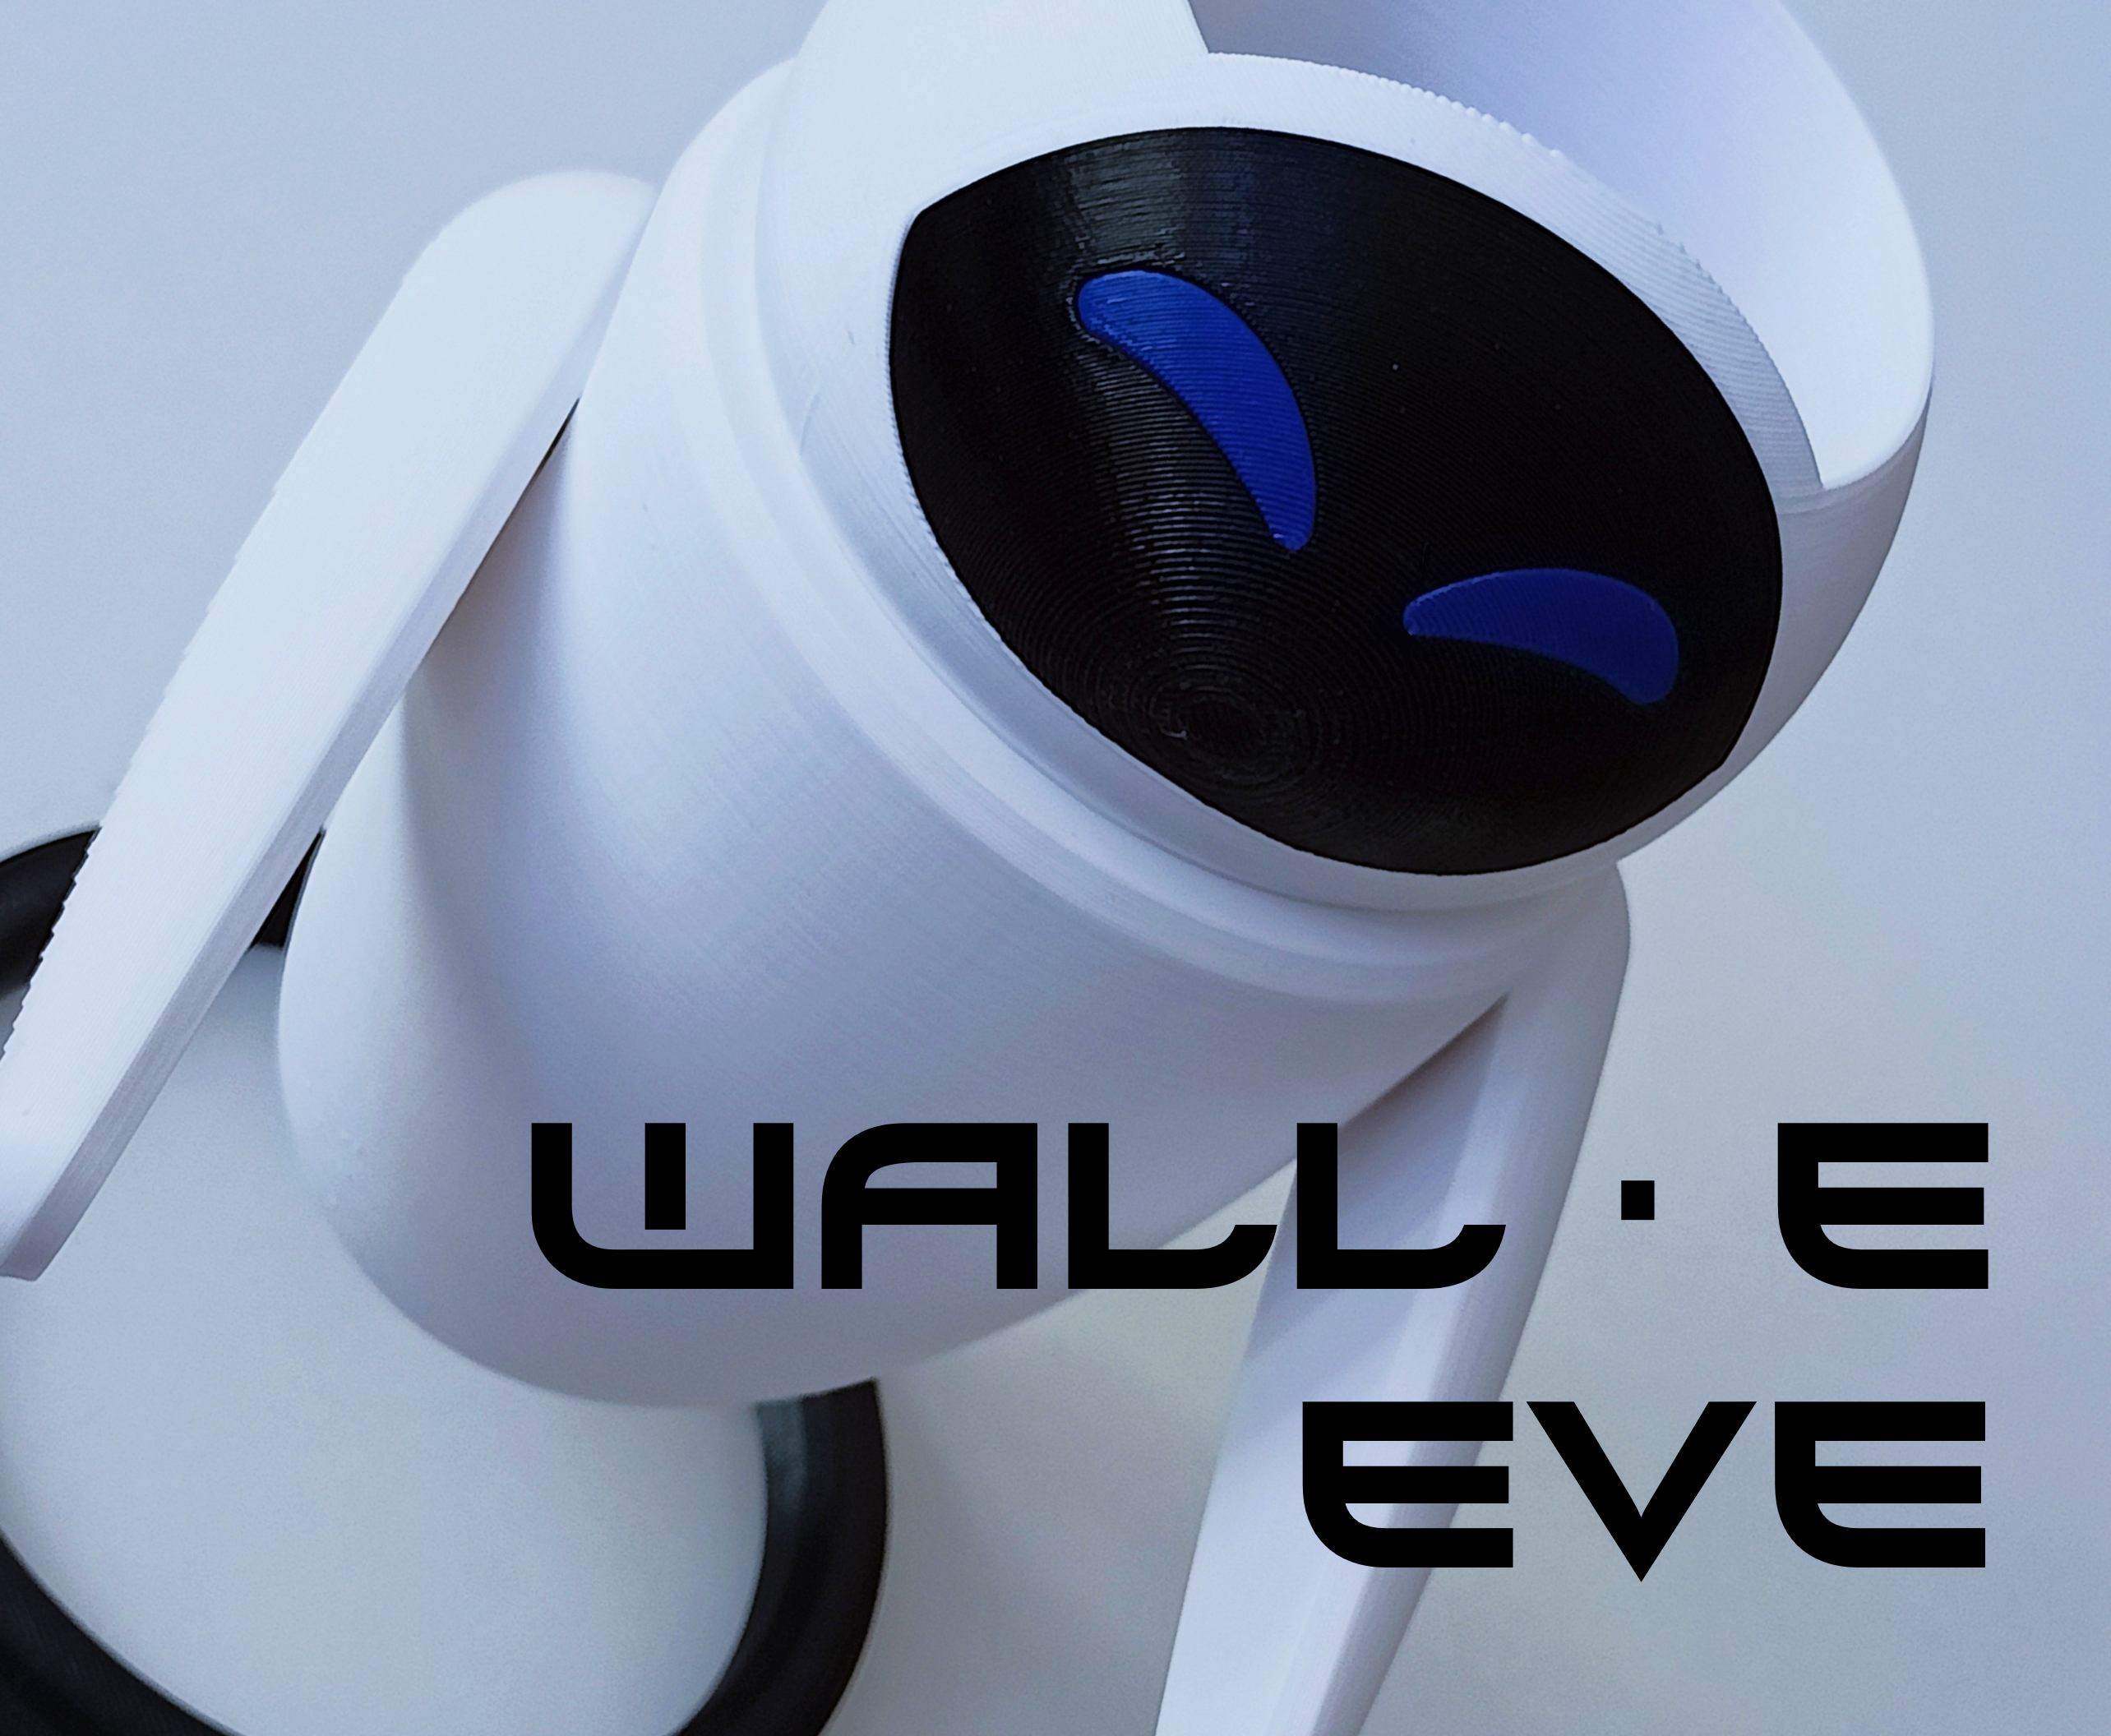 WALL·E - EVE Pencil holder